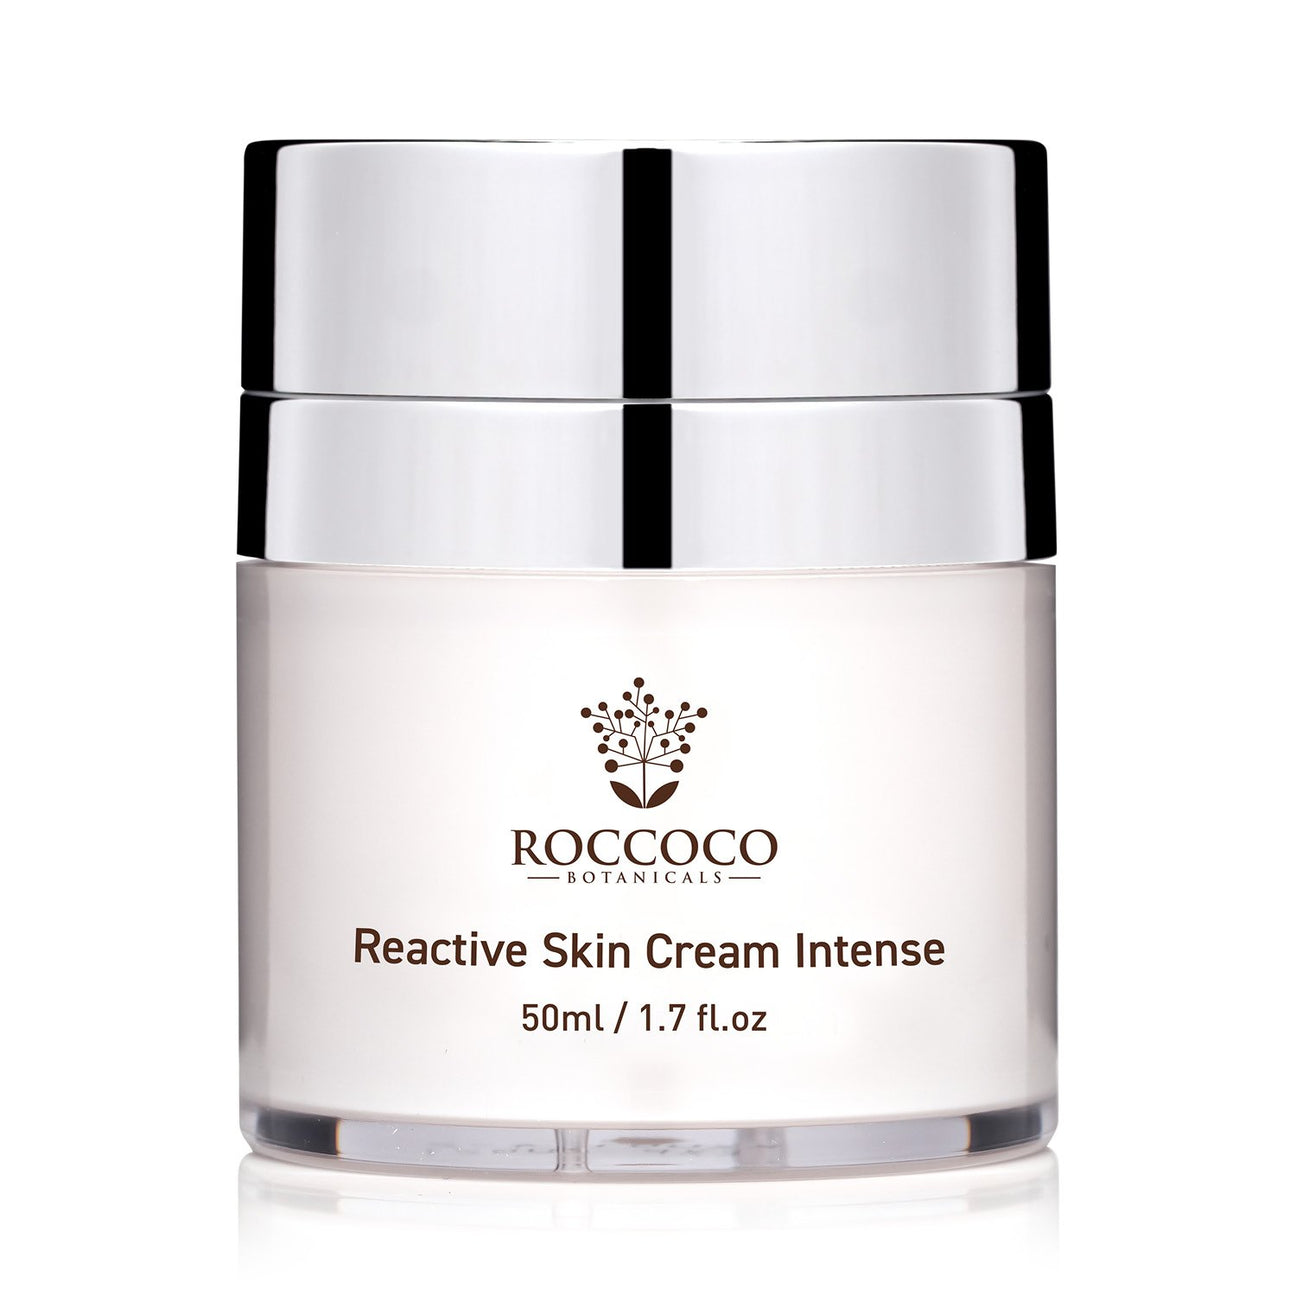 Roccoco Botanicals Reactive Skin Cream Intense - Click to Buy!